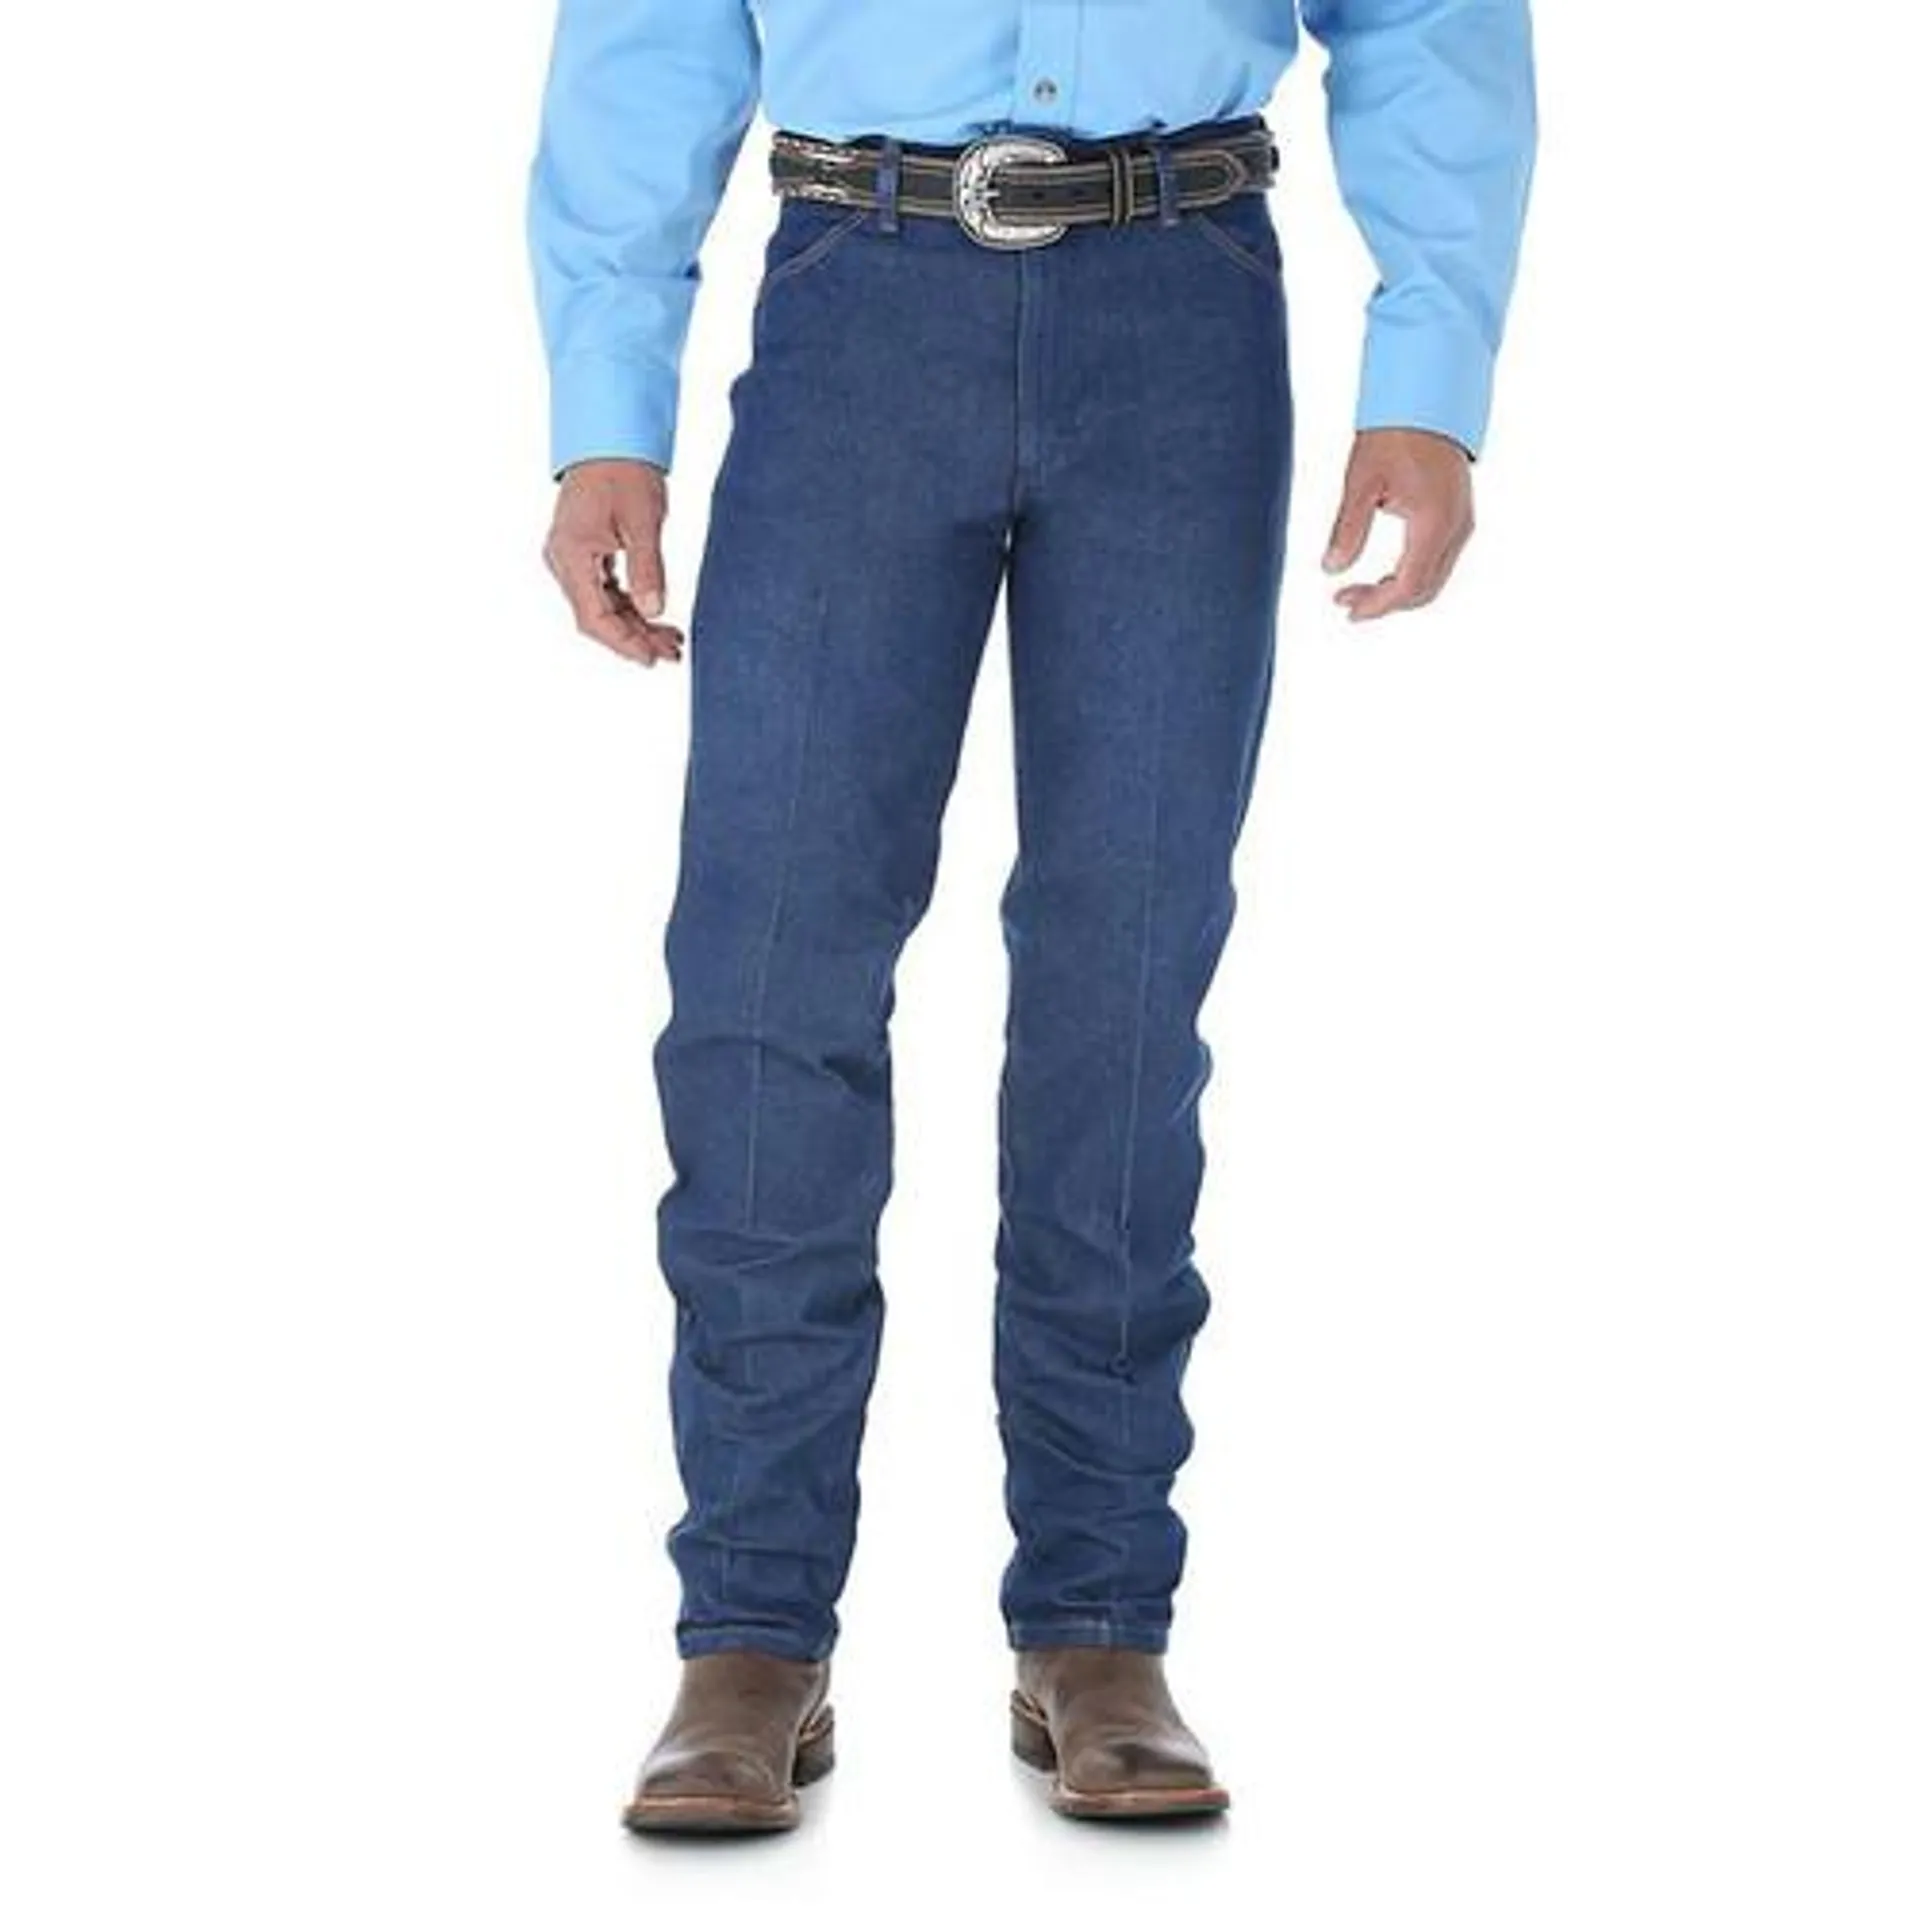 Wrangler - Mens Rigid Cowboy Cut Original Fit Jeans - Indigo